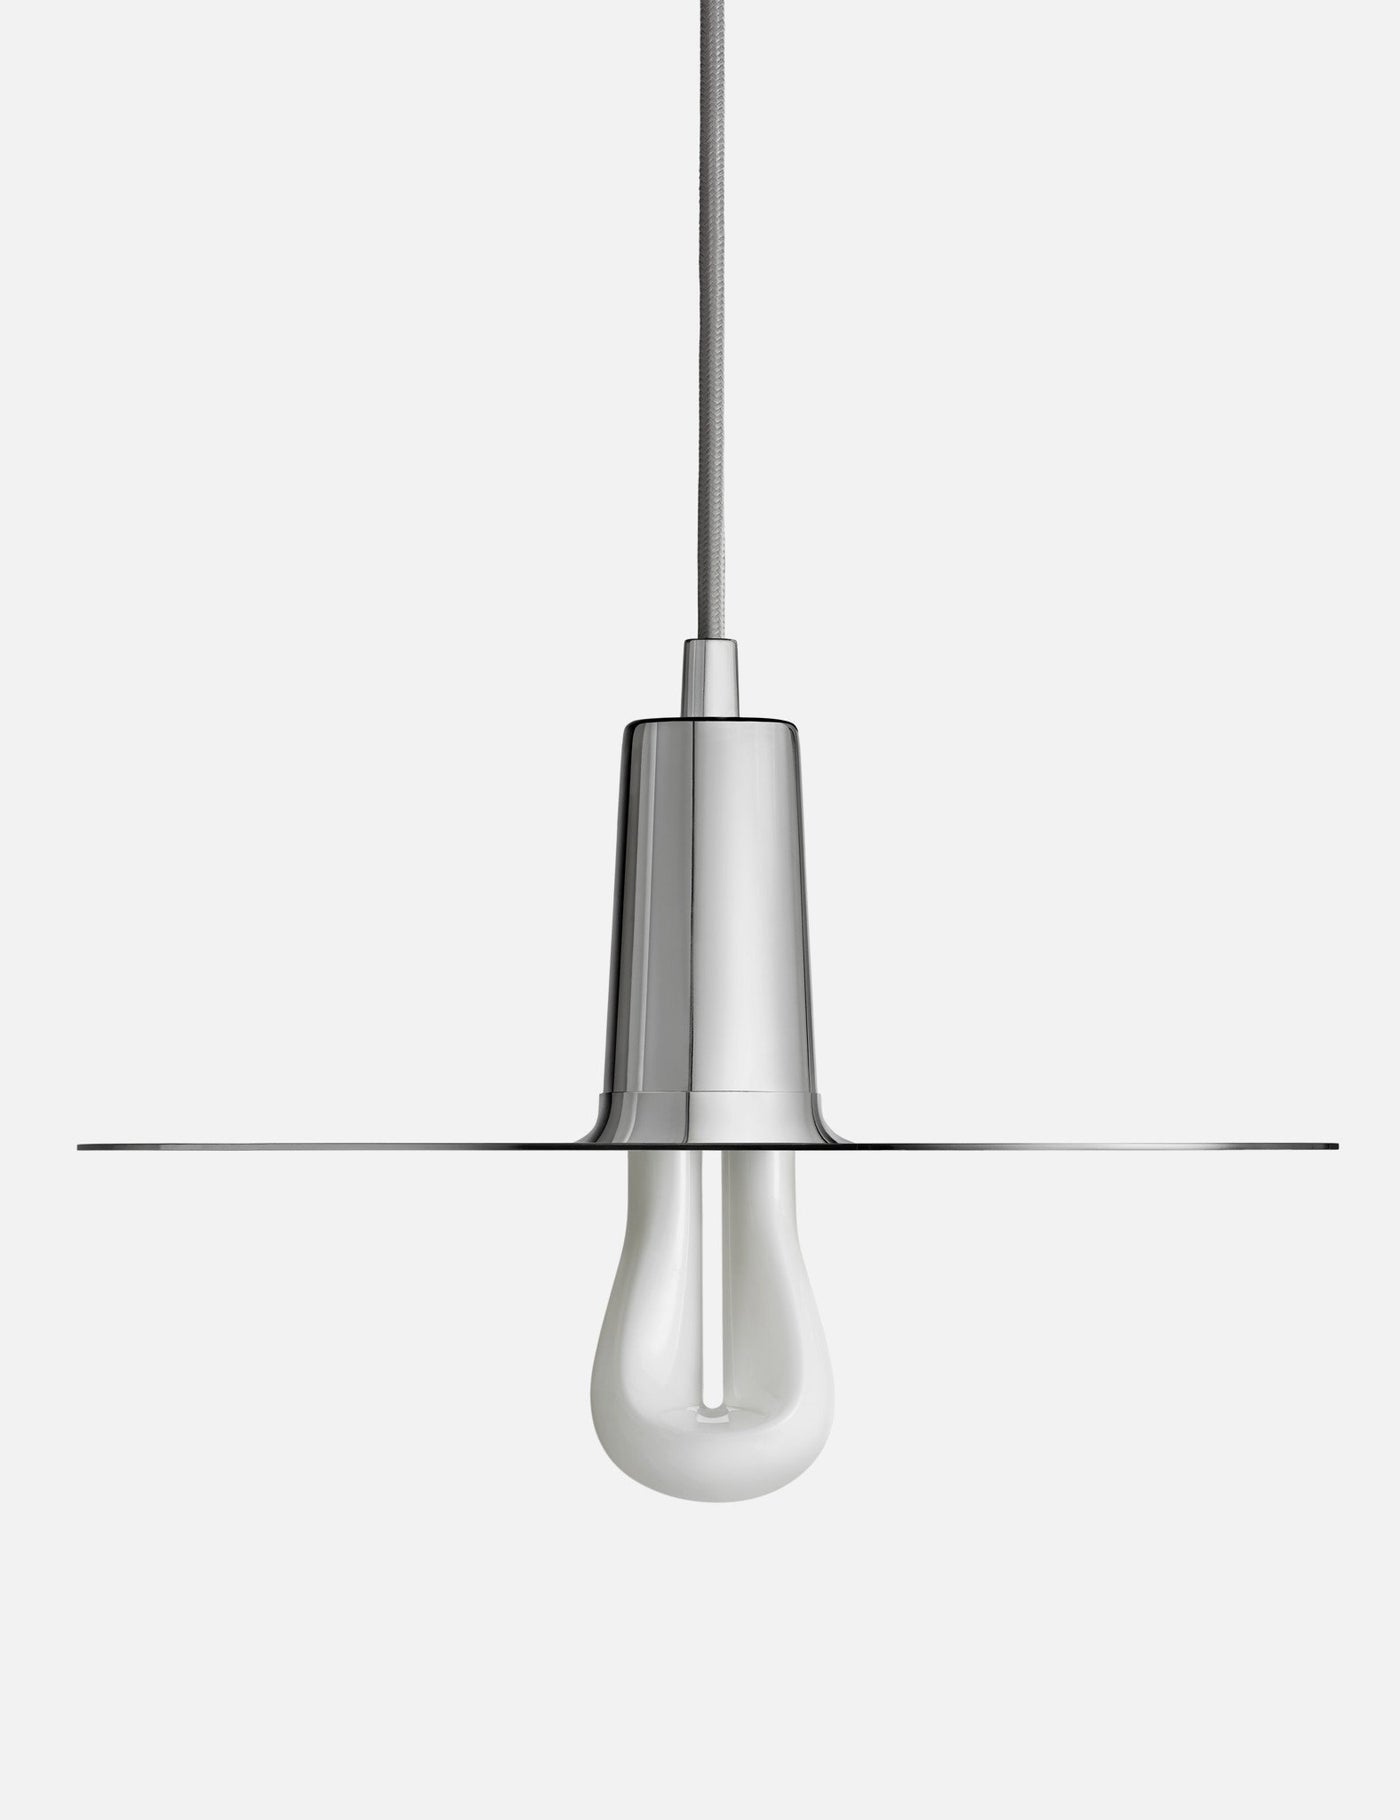 Drop Hat Lamp Shade Set with Plumen 002 LED Bulb